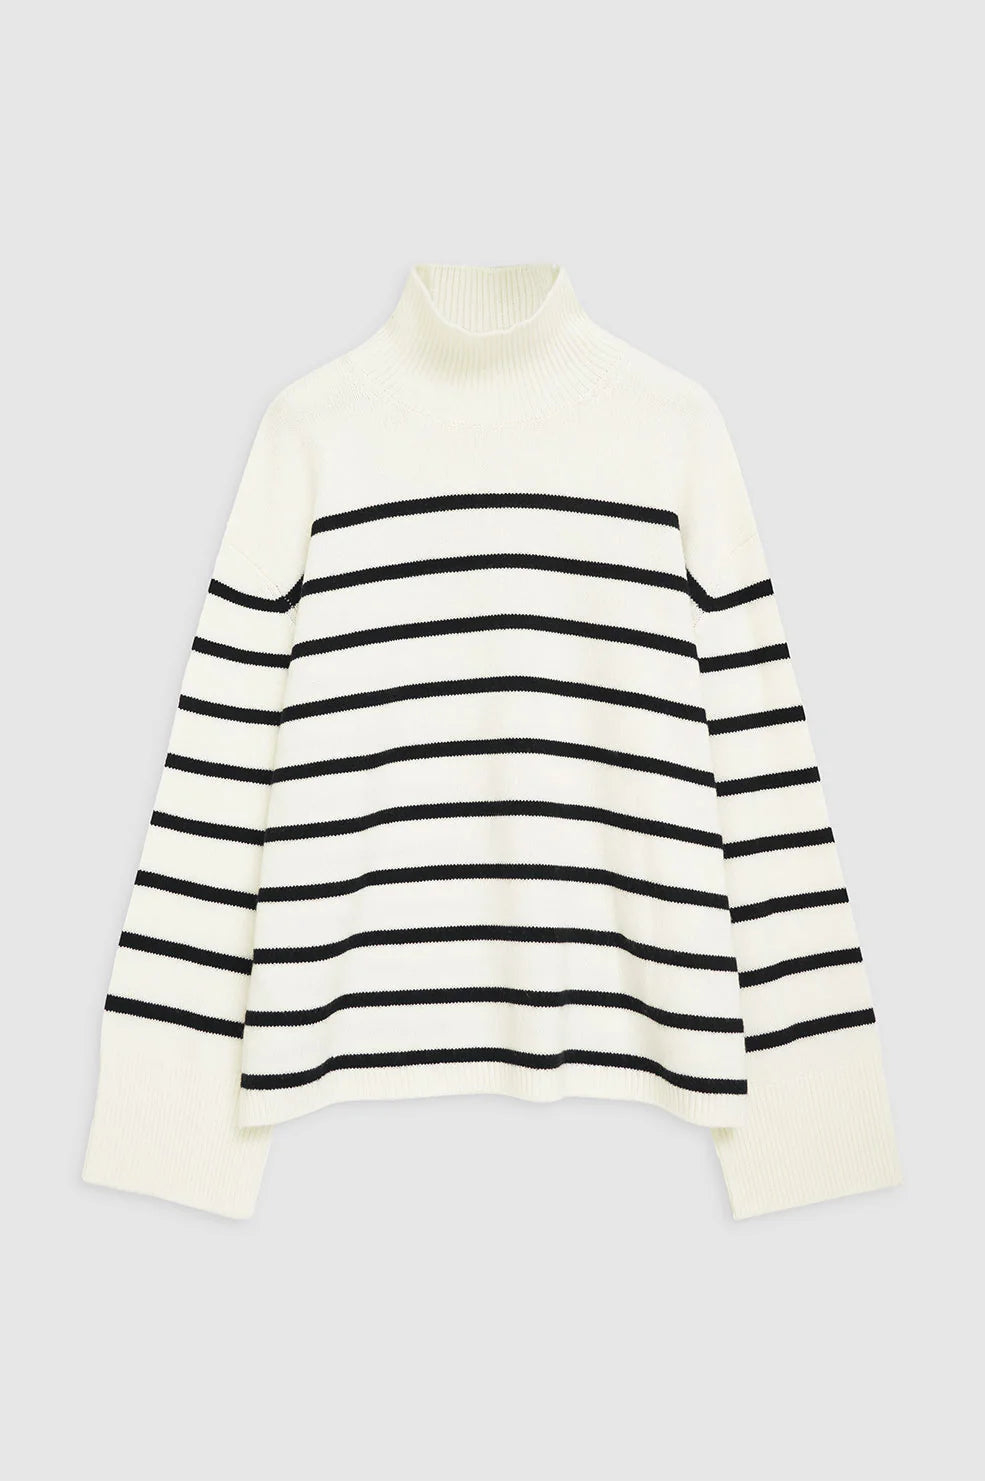 Anine Bing Courtney Sweater - Ivory and Black Stripe